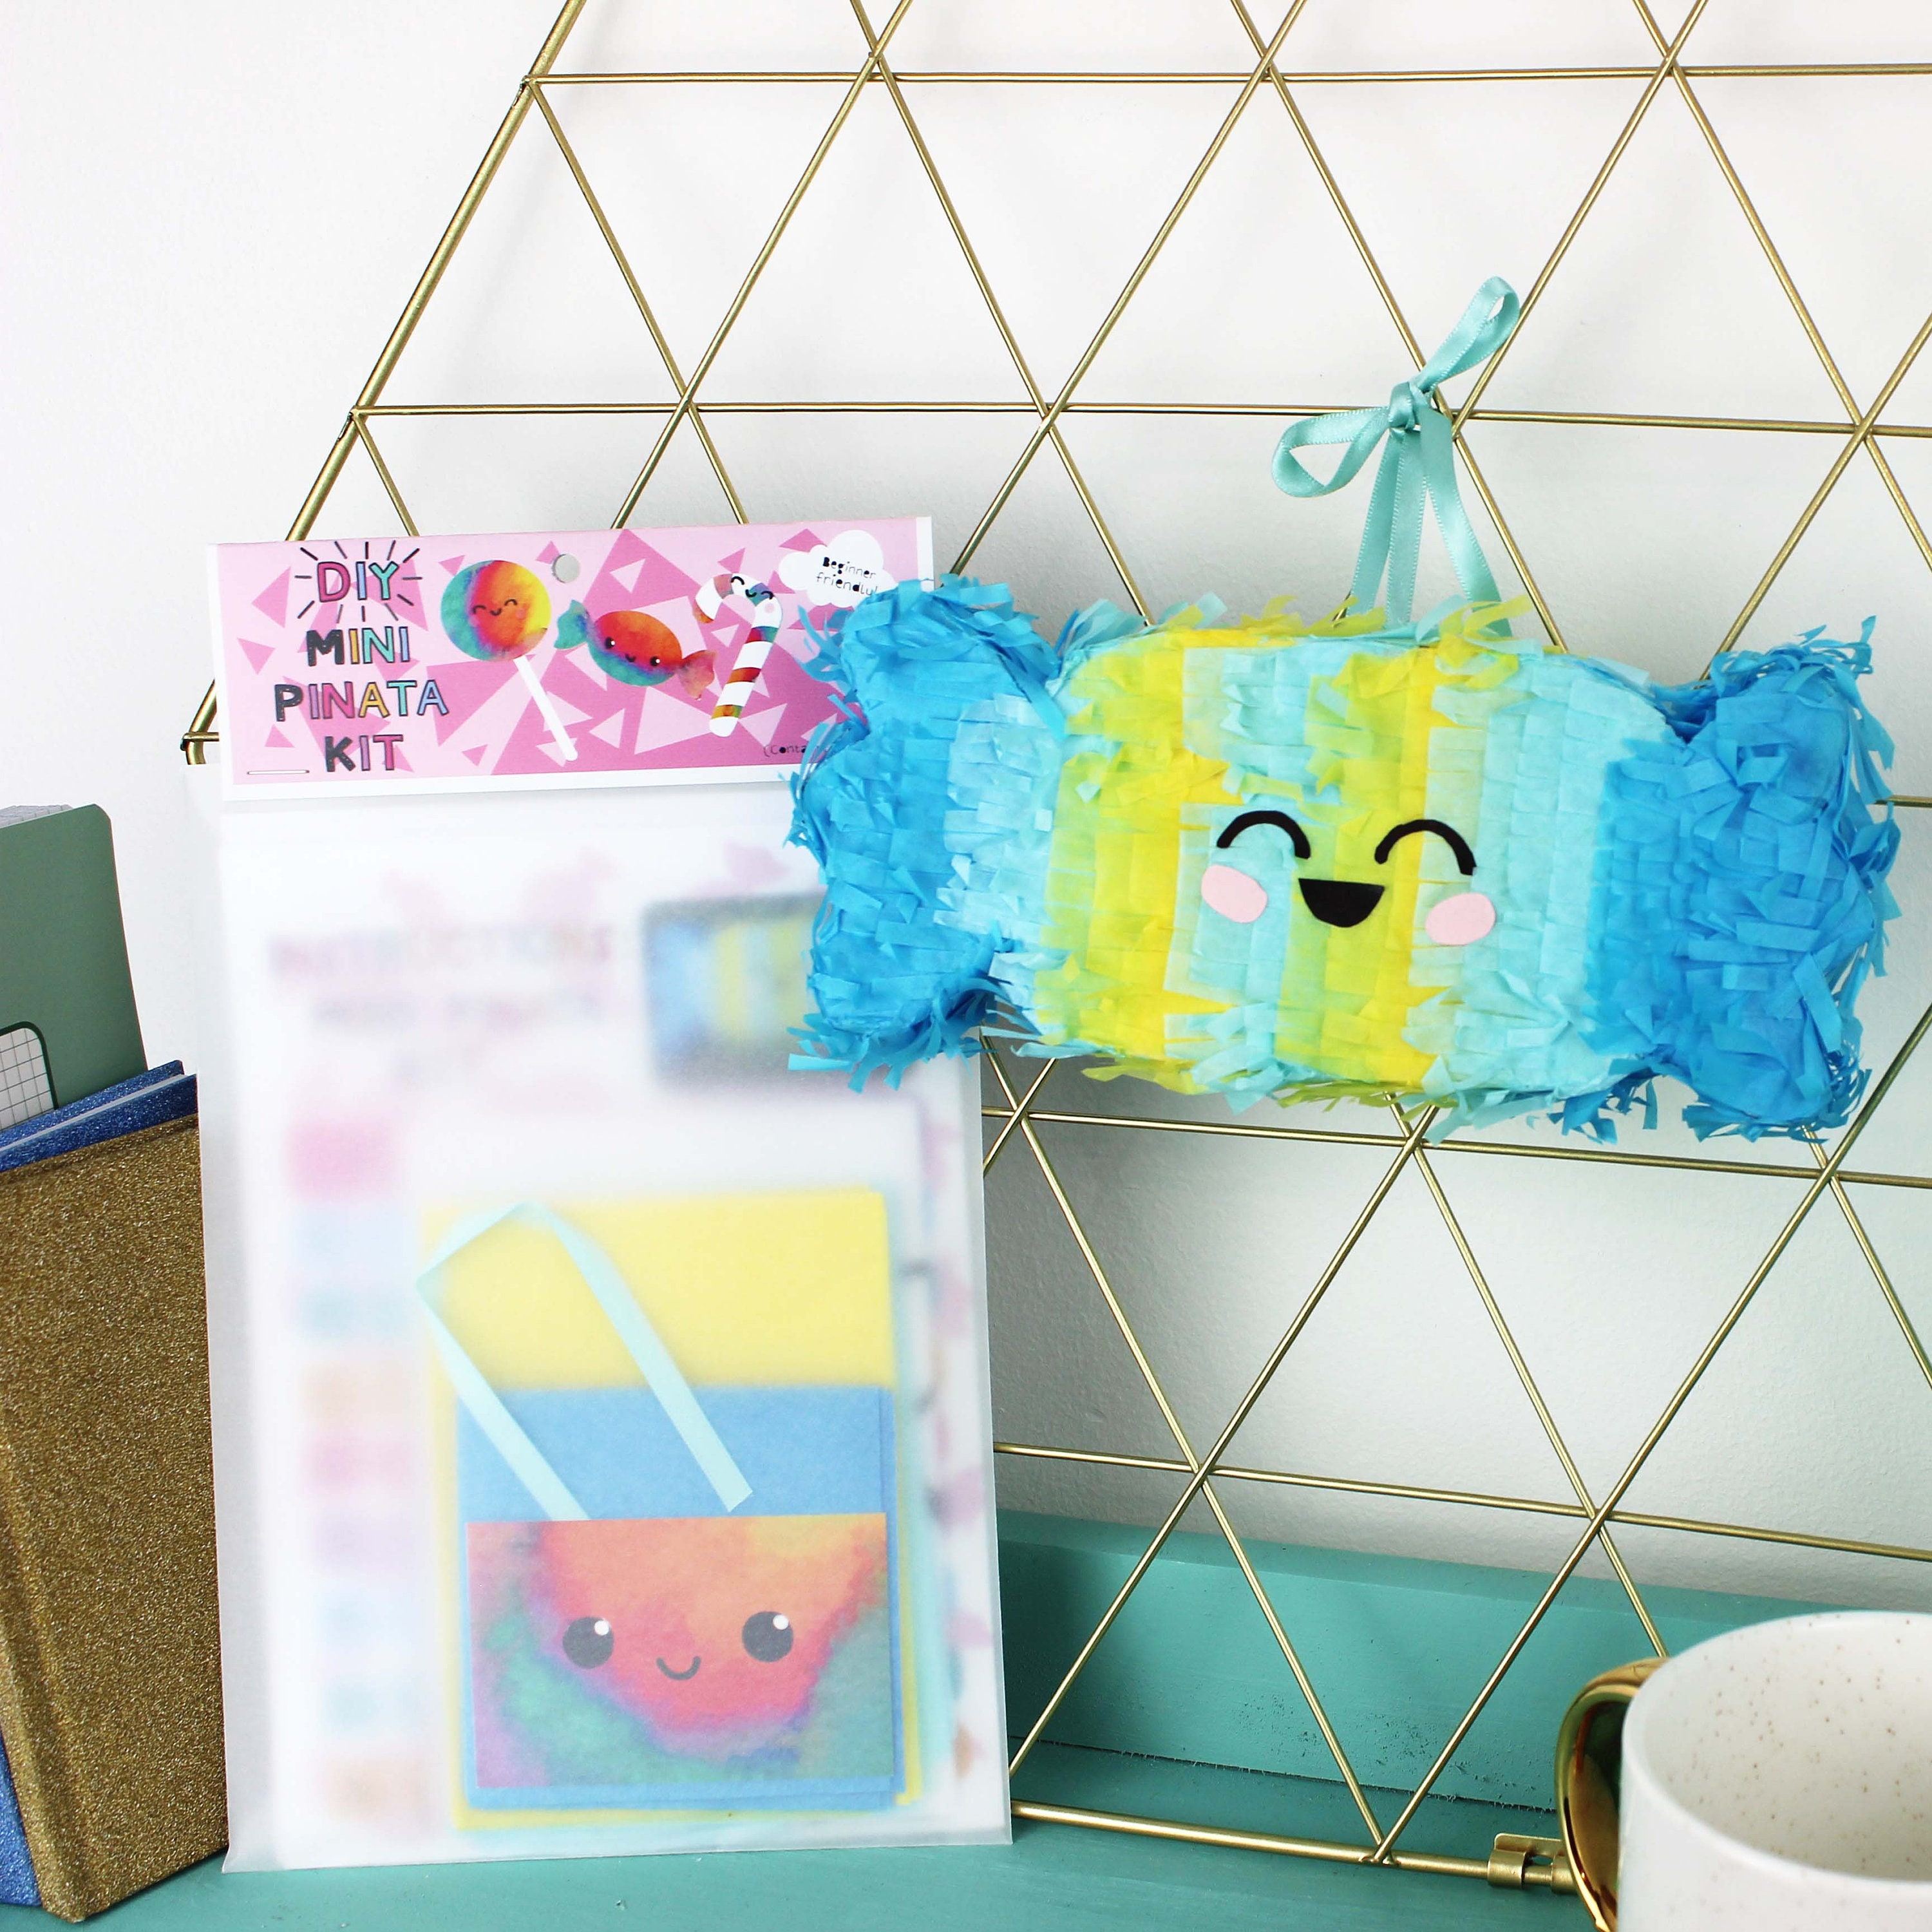 Bundle of candy mini pinata craft kits party decorations | Etsy